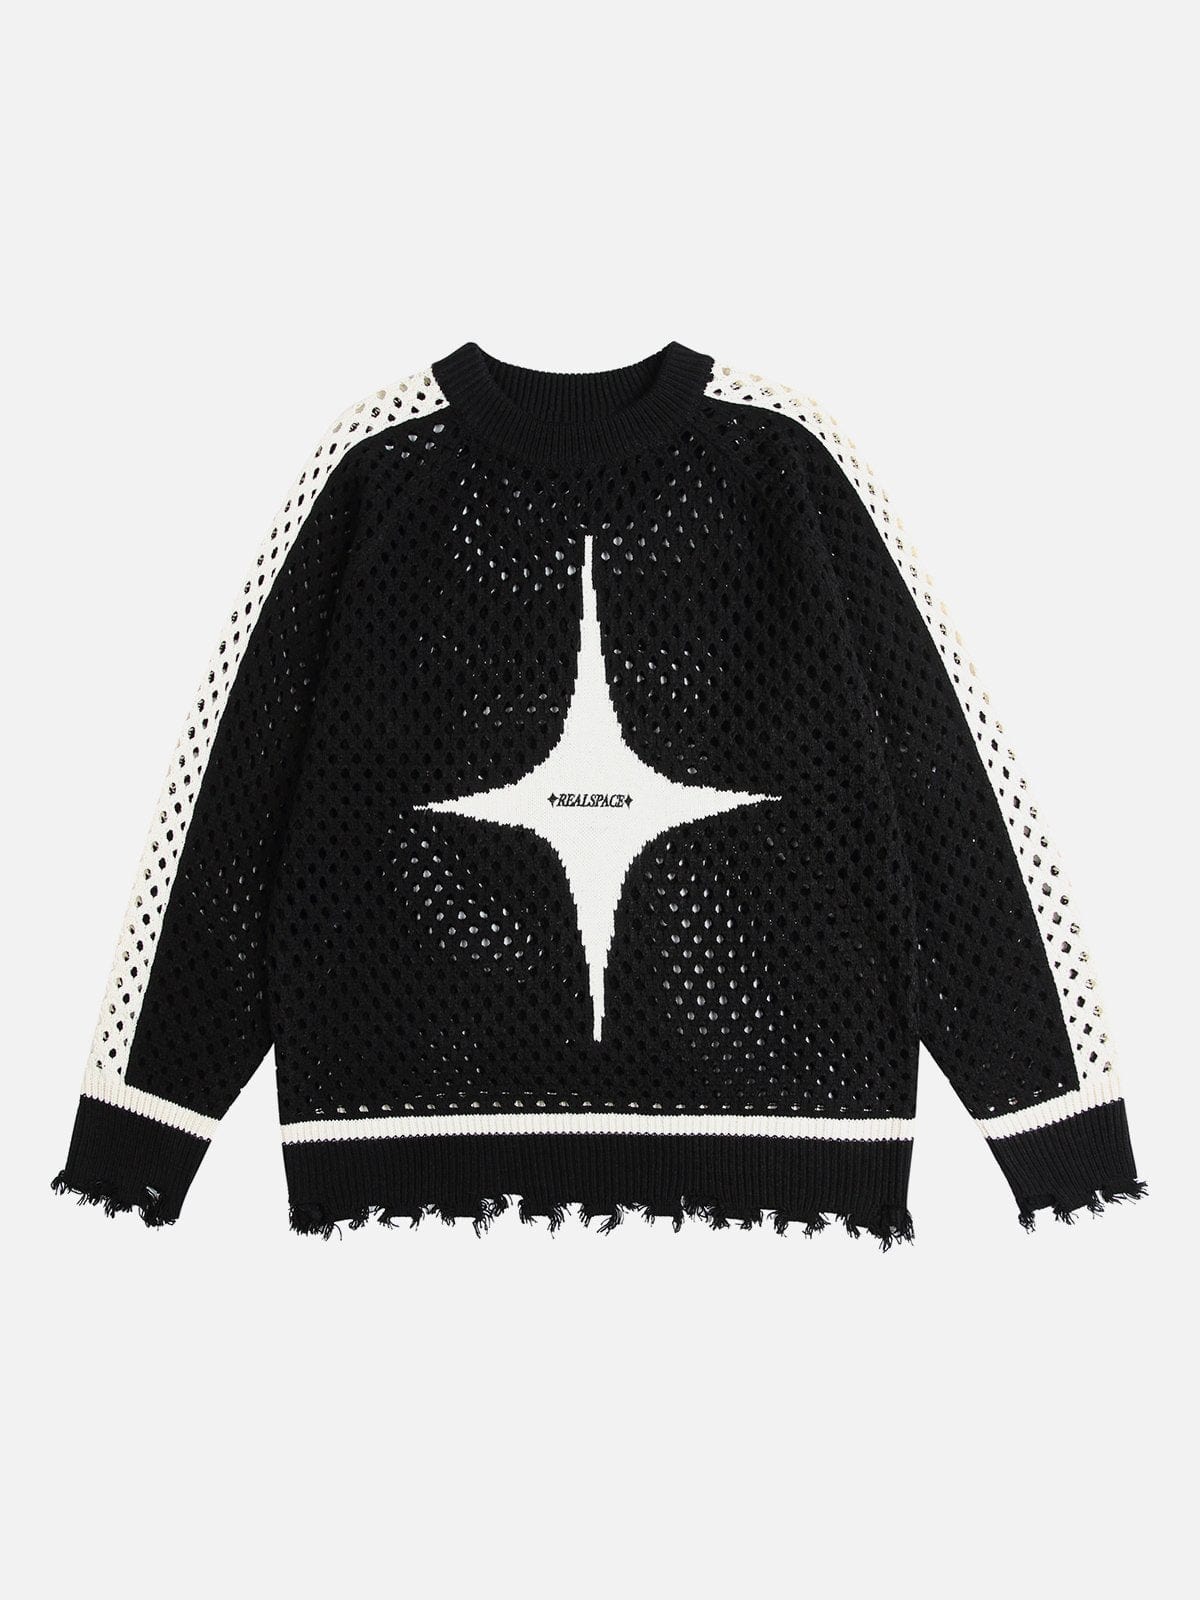 NEV Hollow Fabric Star Sweatshirt